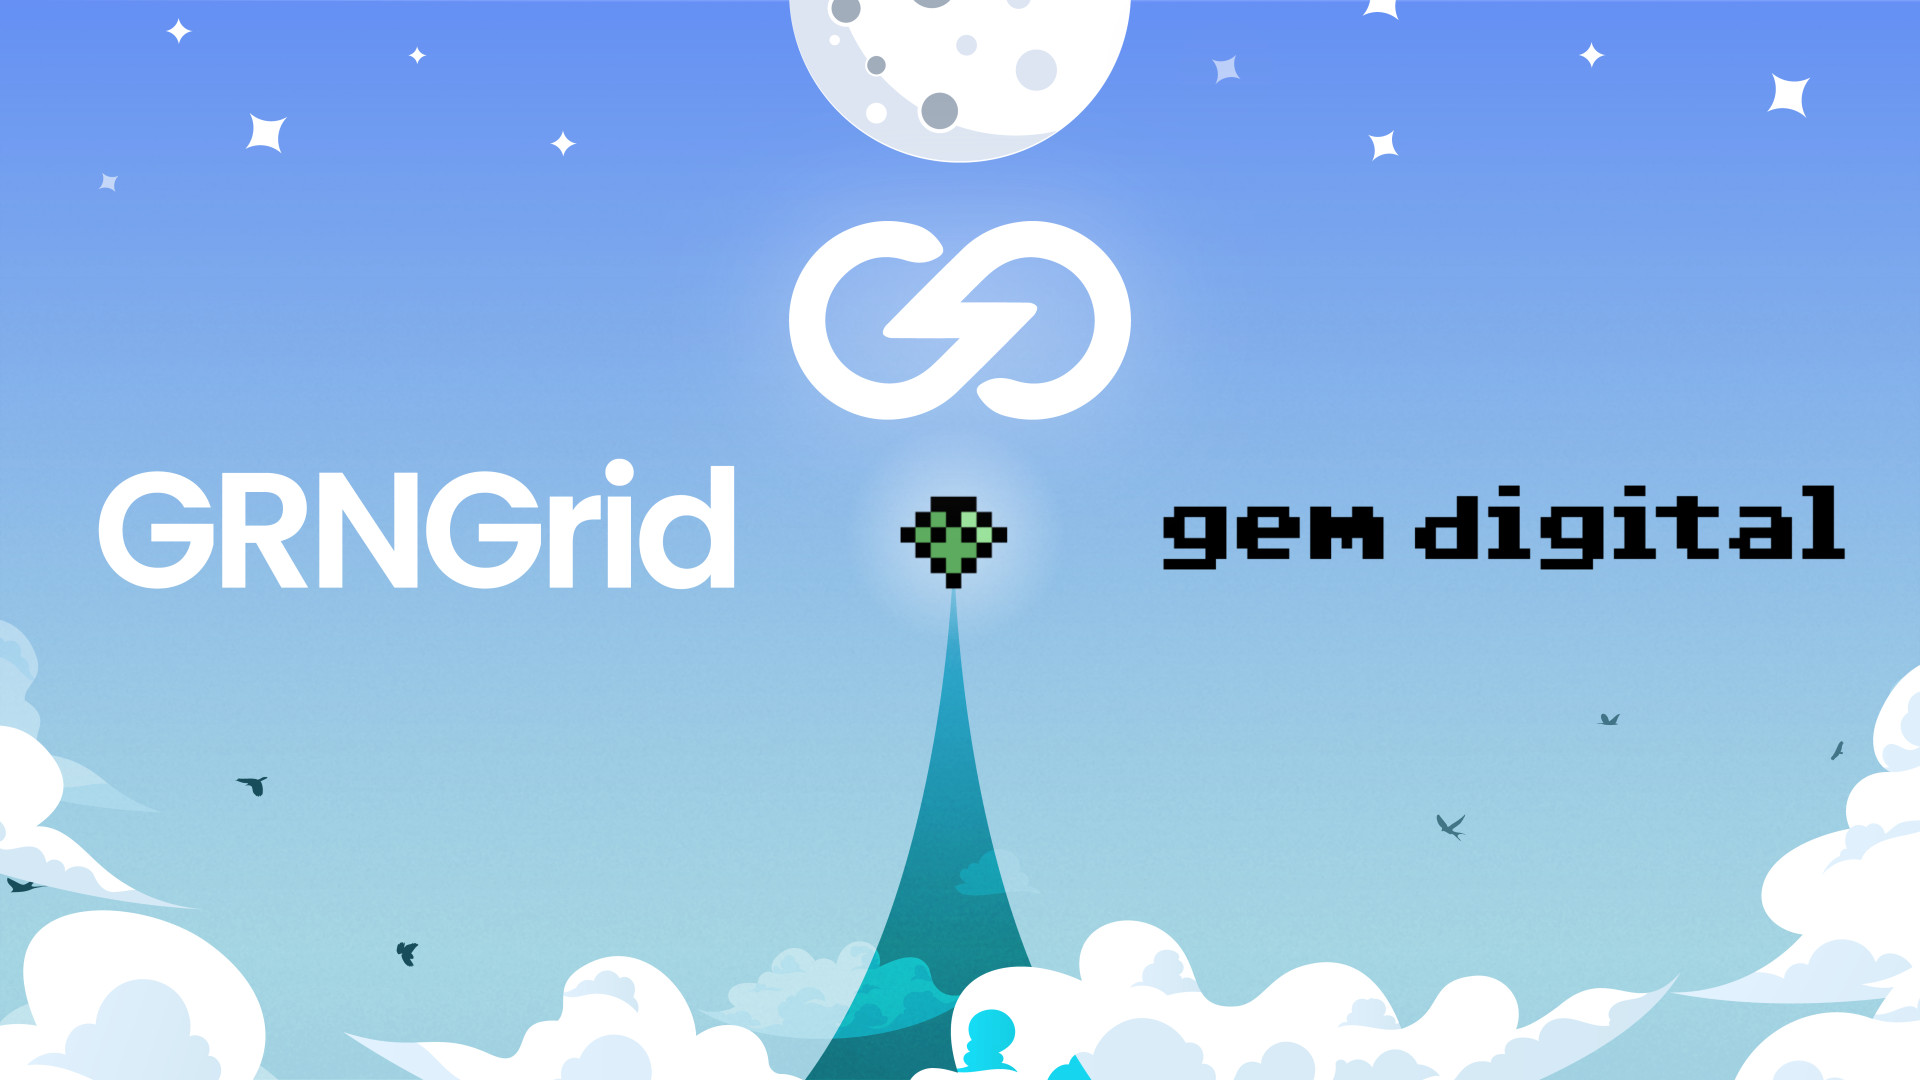  gem grngrid commitment digital secures million usd 